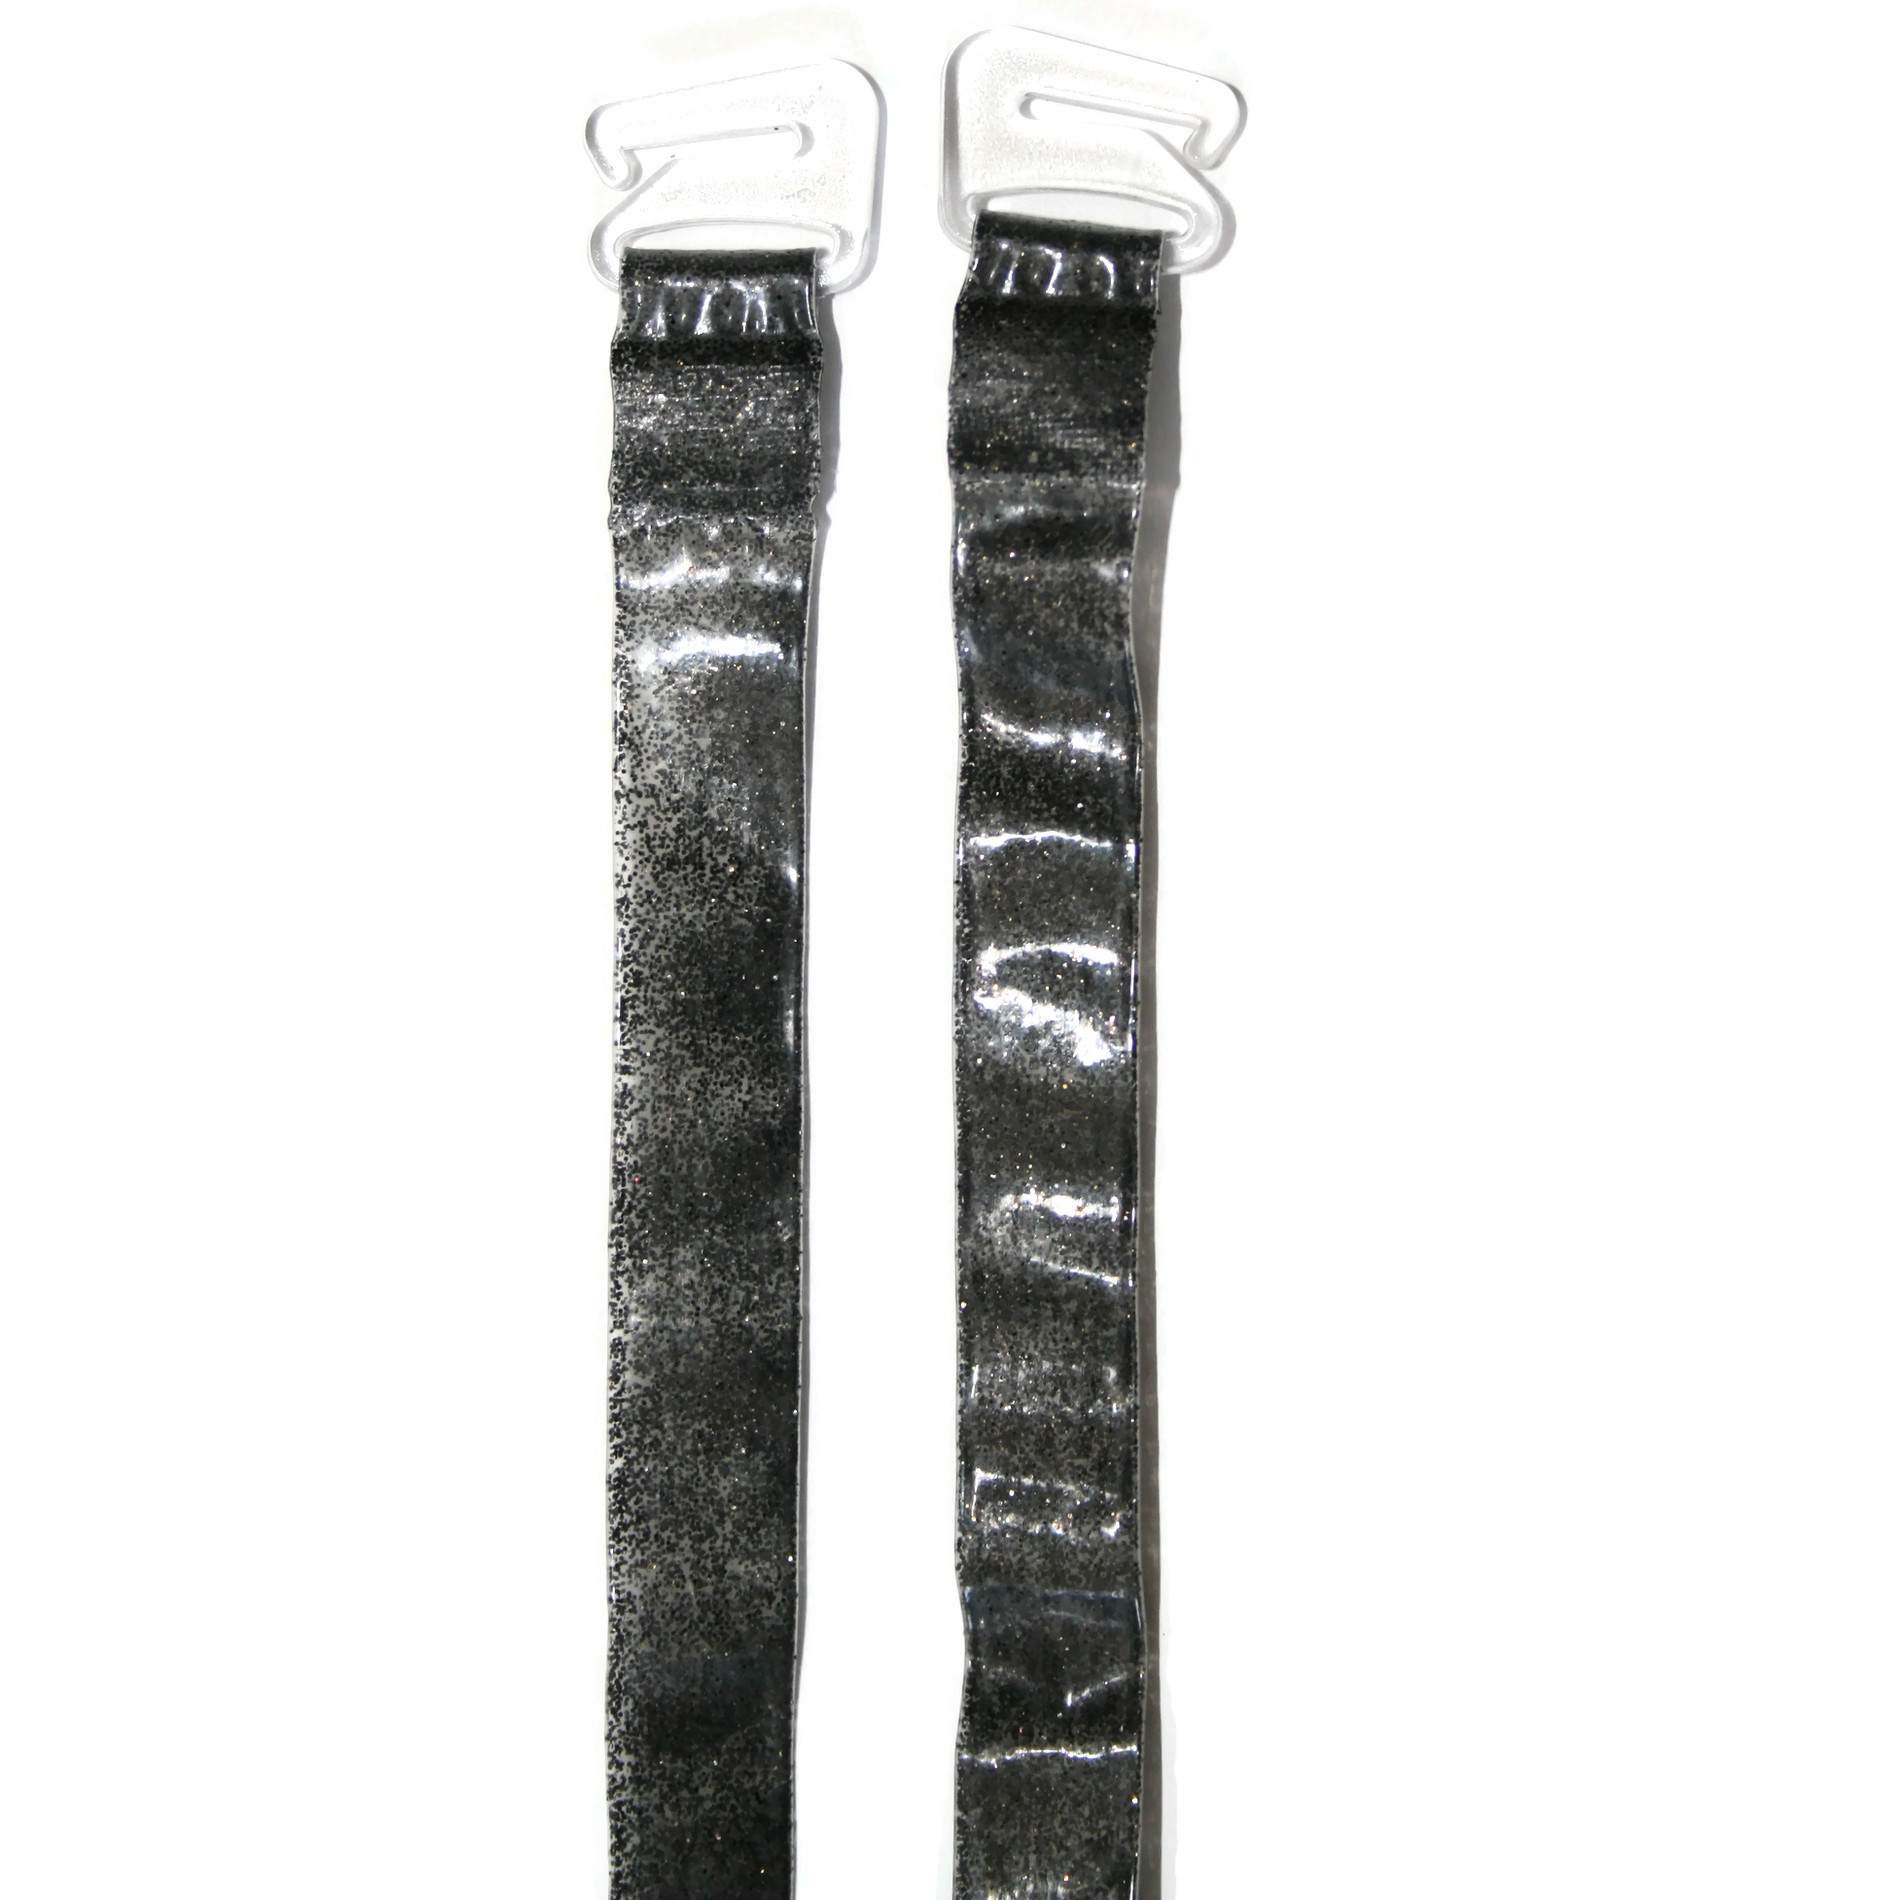 BH Träger / Silikonträger schwarz, 10mm breit